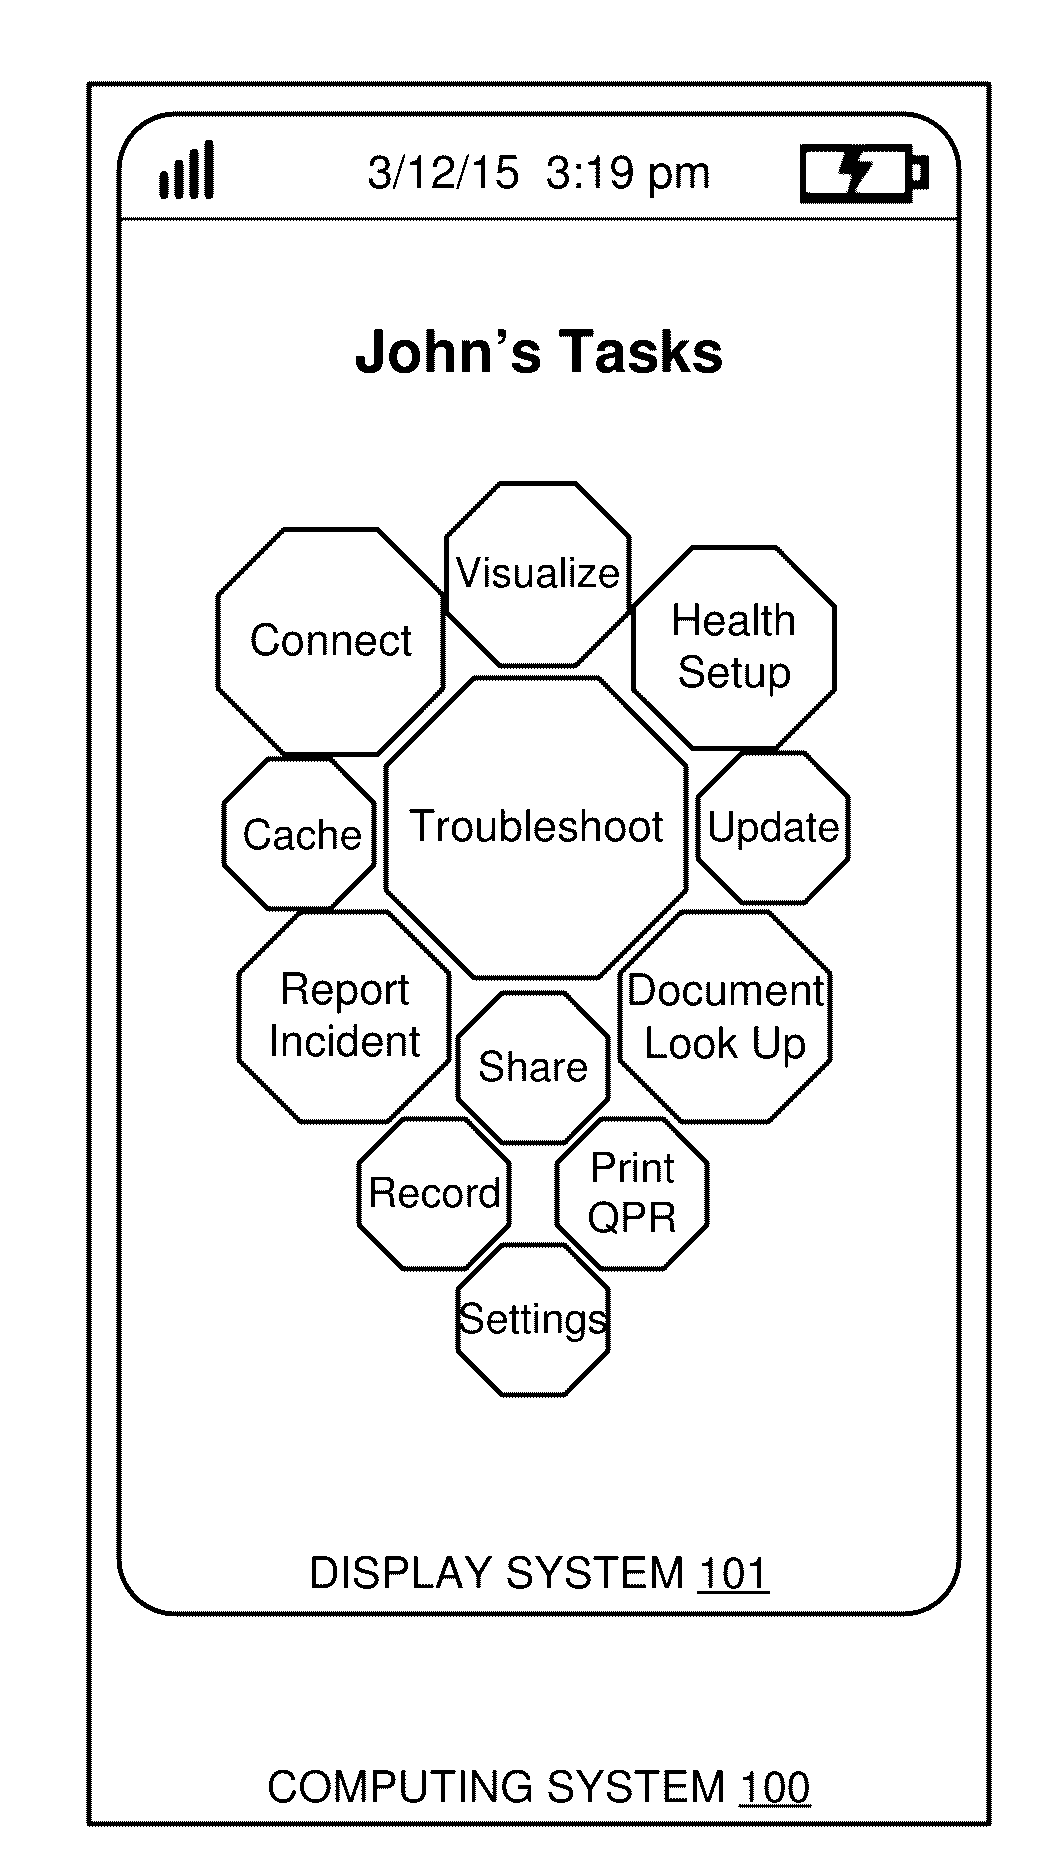 Presentation of tasks to a user